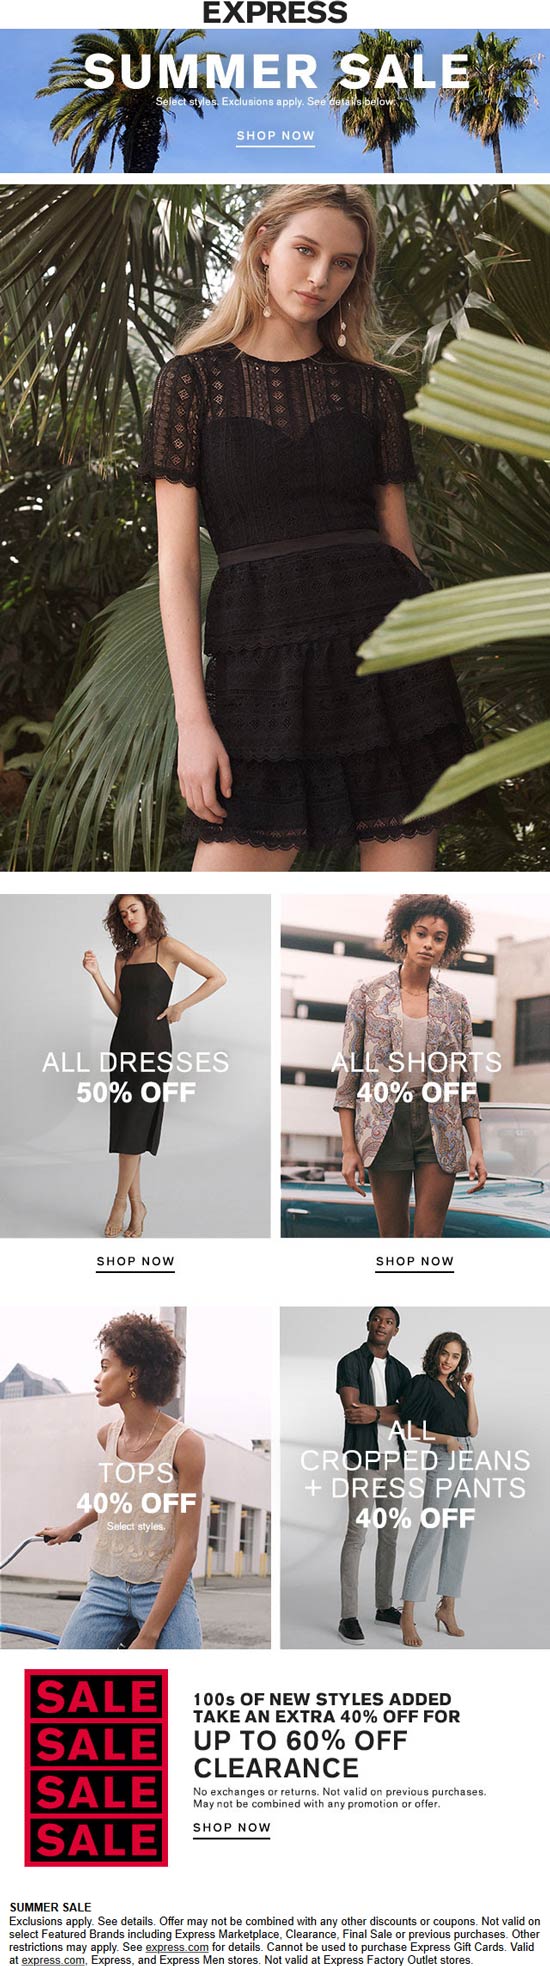 Express stores Coupon  40% off shorts, 50% off all dresses at Express #express